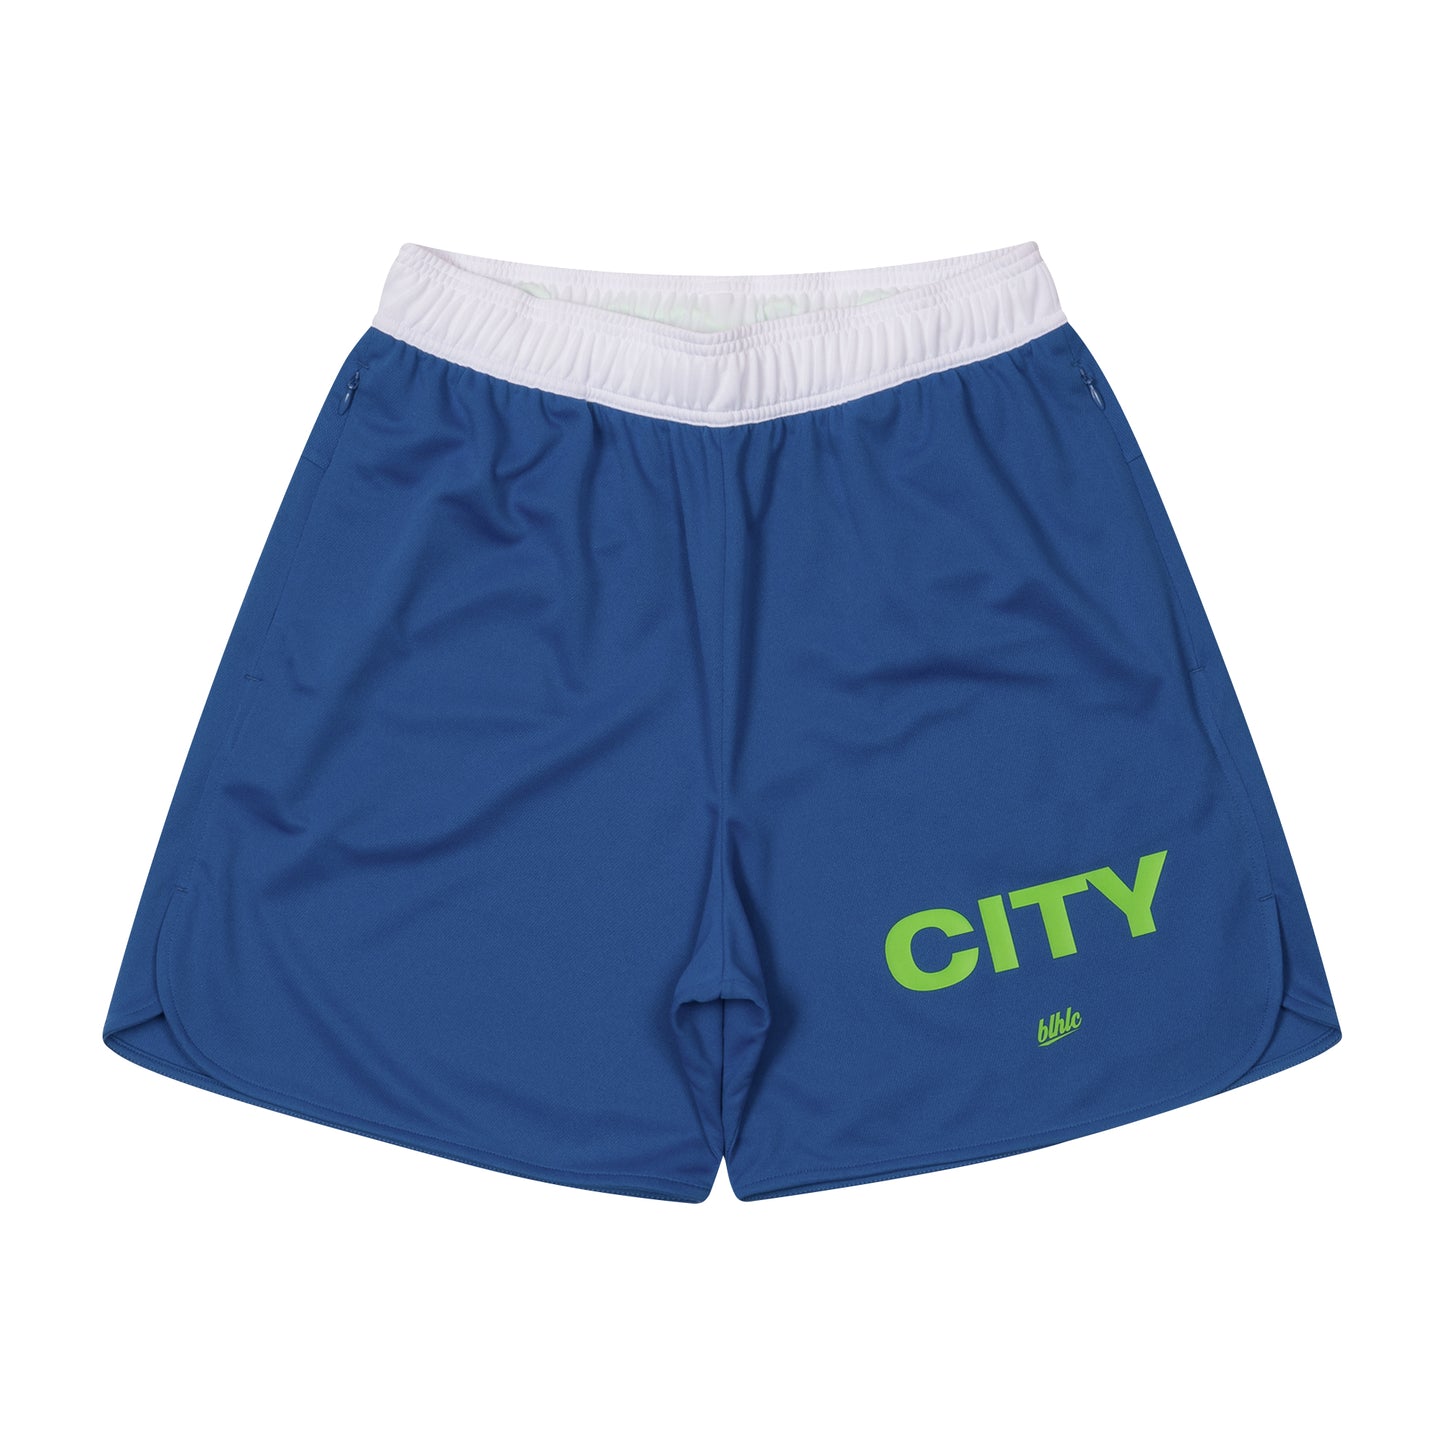 MY CITY Zip Shorts (blue)